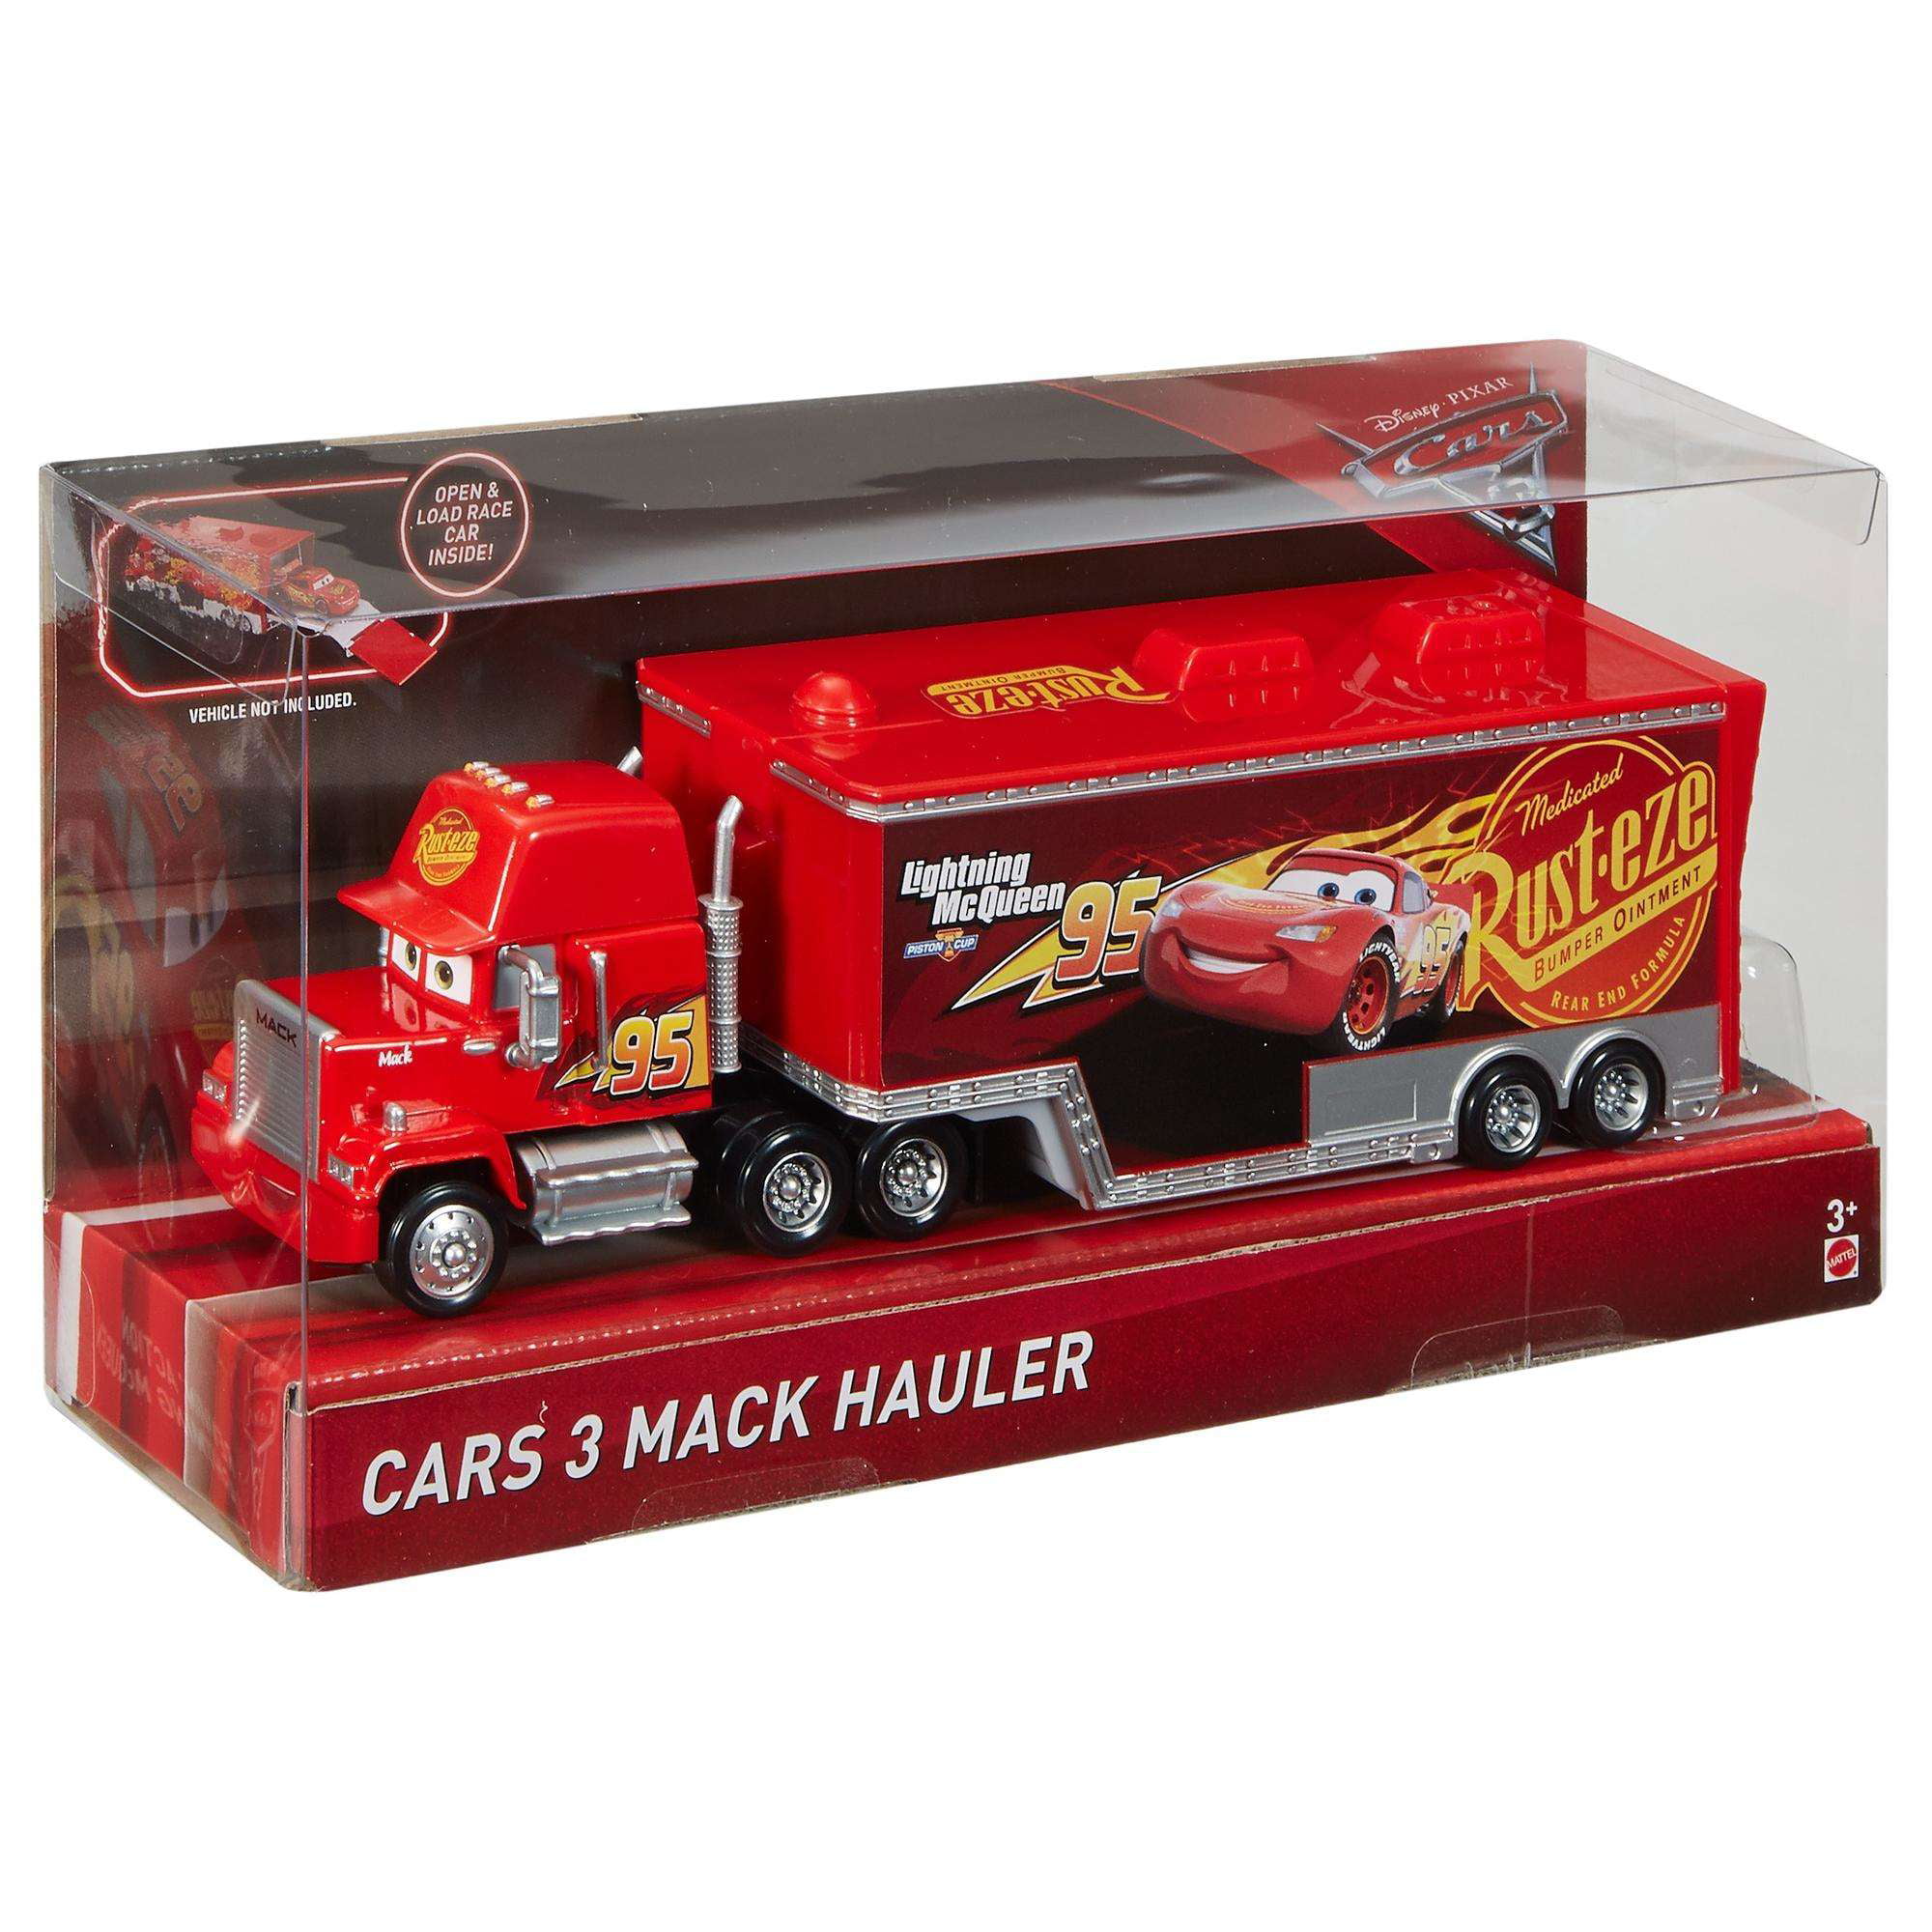 Cars 3 Toys Mcqueen Jackson Mack Truck Hauler & Racer Diecast Toy Car 1:55 Loose 